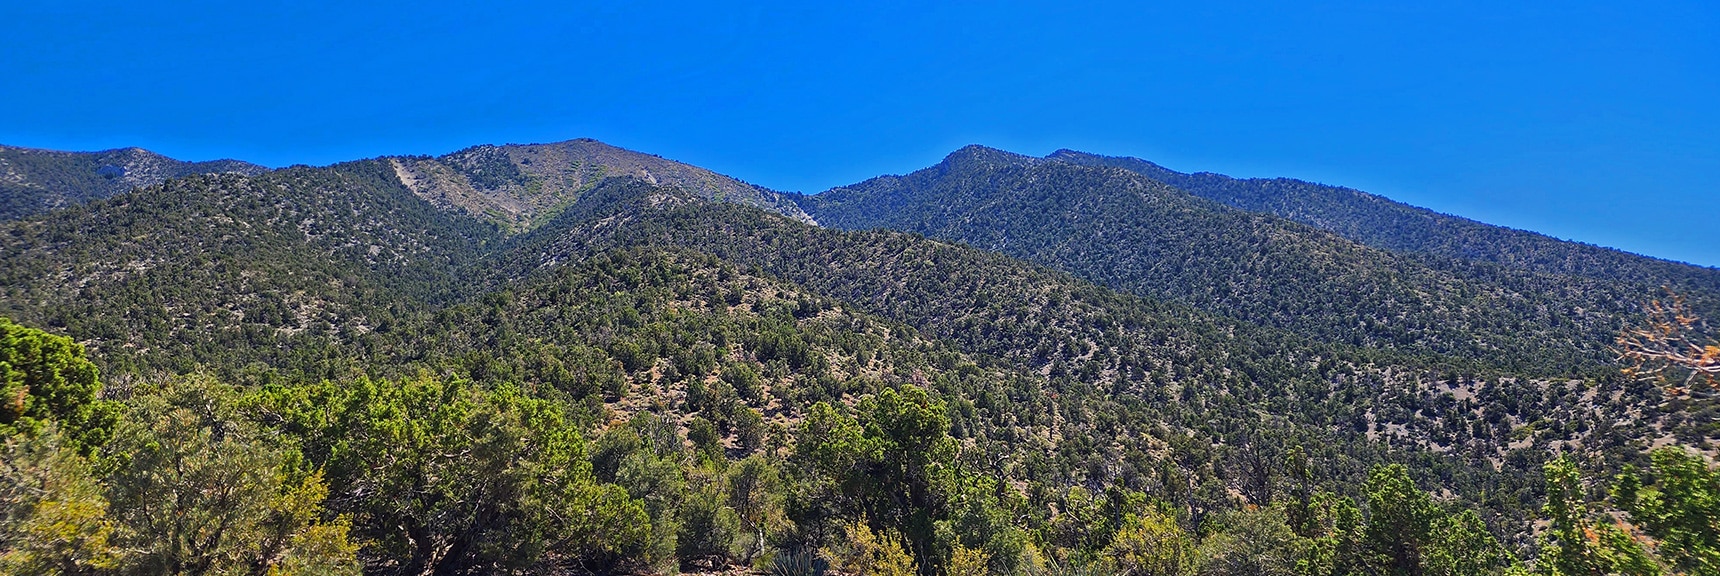 Descending 4WD Road, View Back Toward Burnt Peak and El Bastardo Peak | Kyle Canyon Grand Crossing | Northern Half | La Madre Mountains Wilderness, Nevada